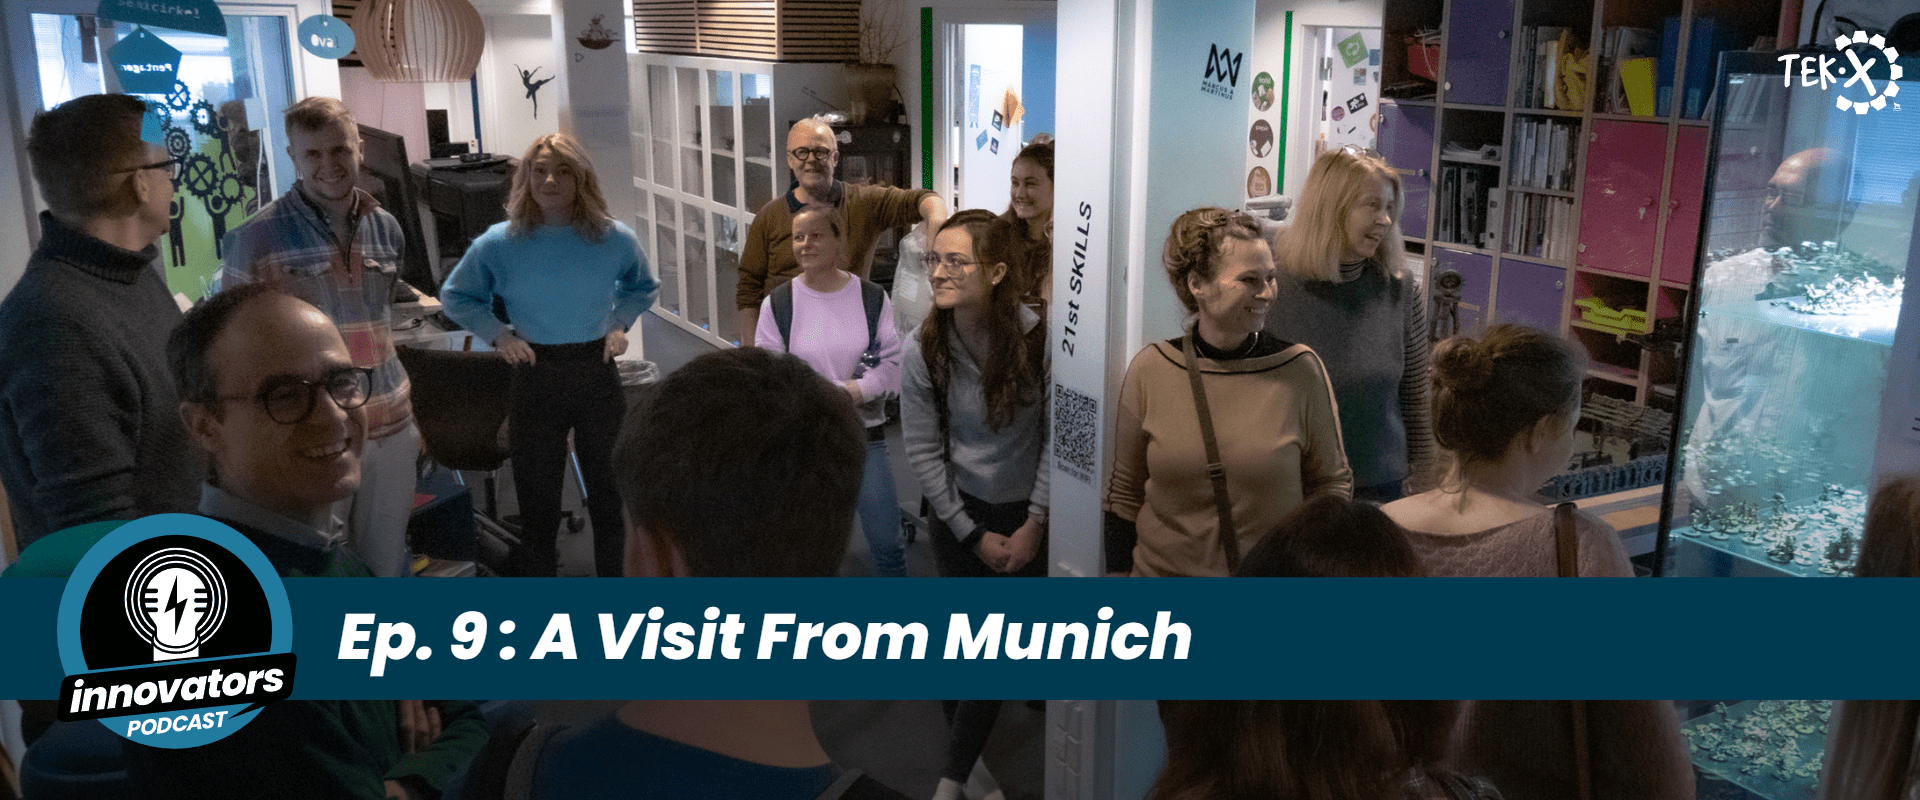 Innovators Episode 9 - A Visit From Munich